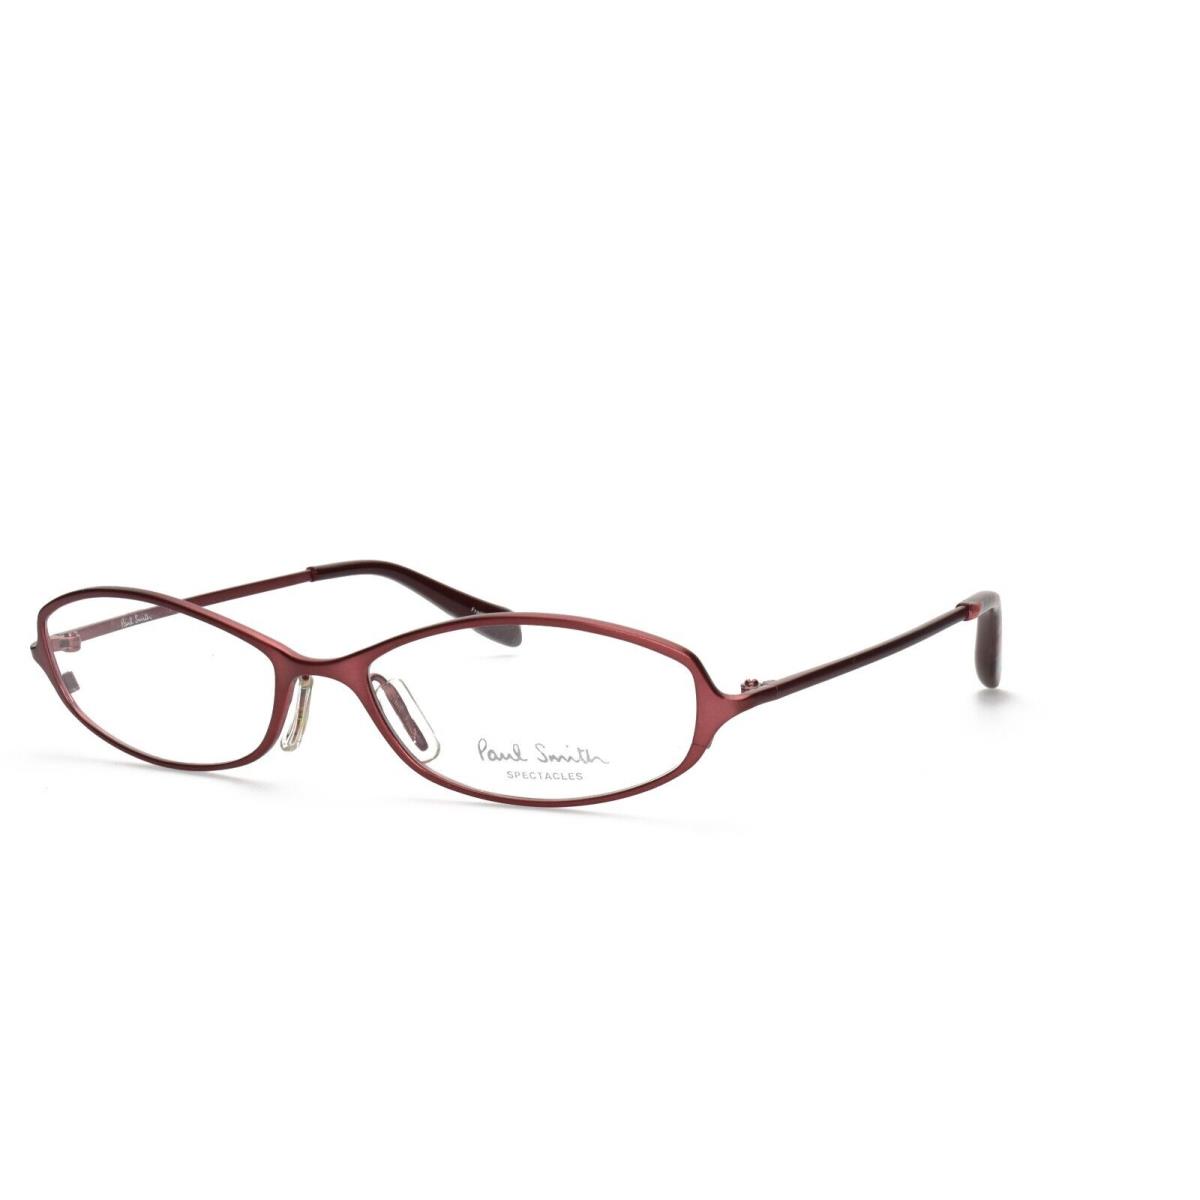 Paul Smith 199 Rou 51-16-130 Red Vtg Vintage Titanium Eyeglasses Frames